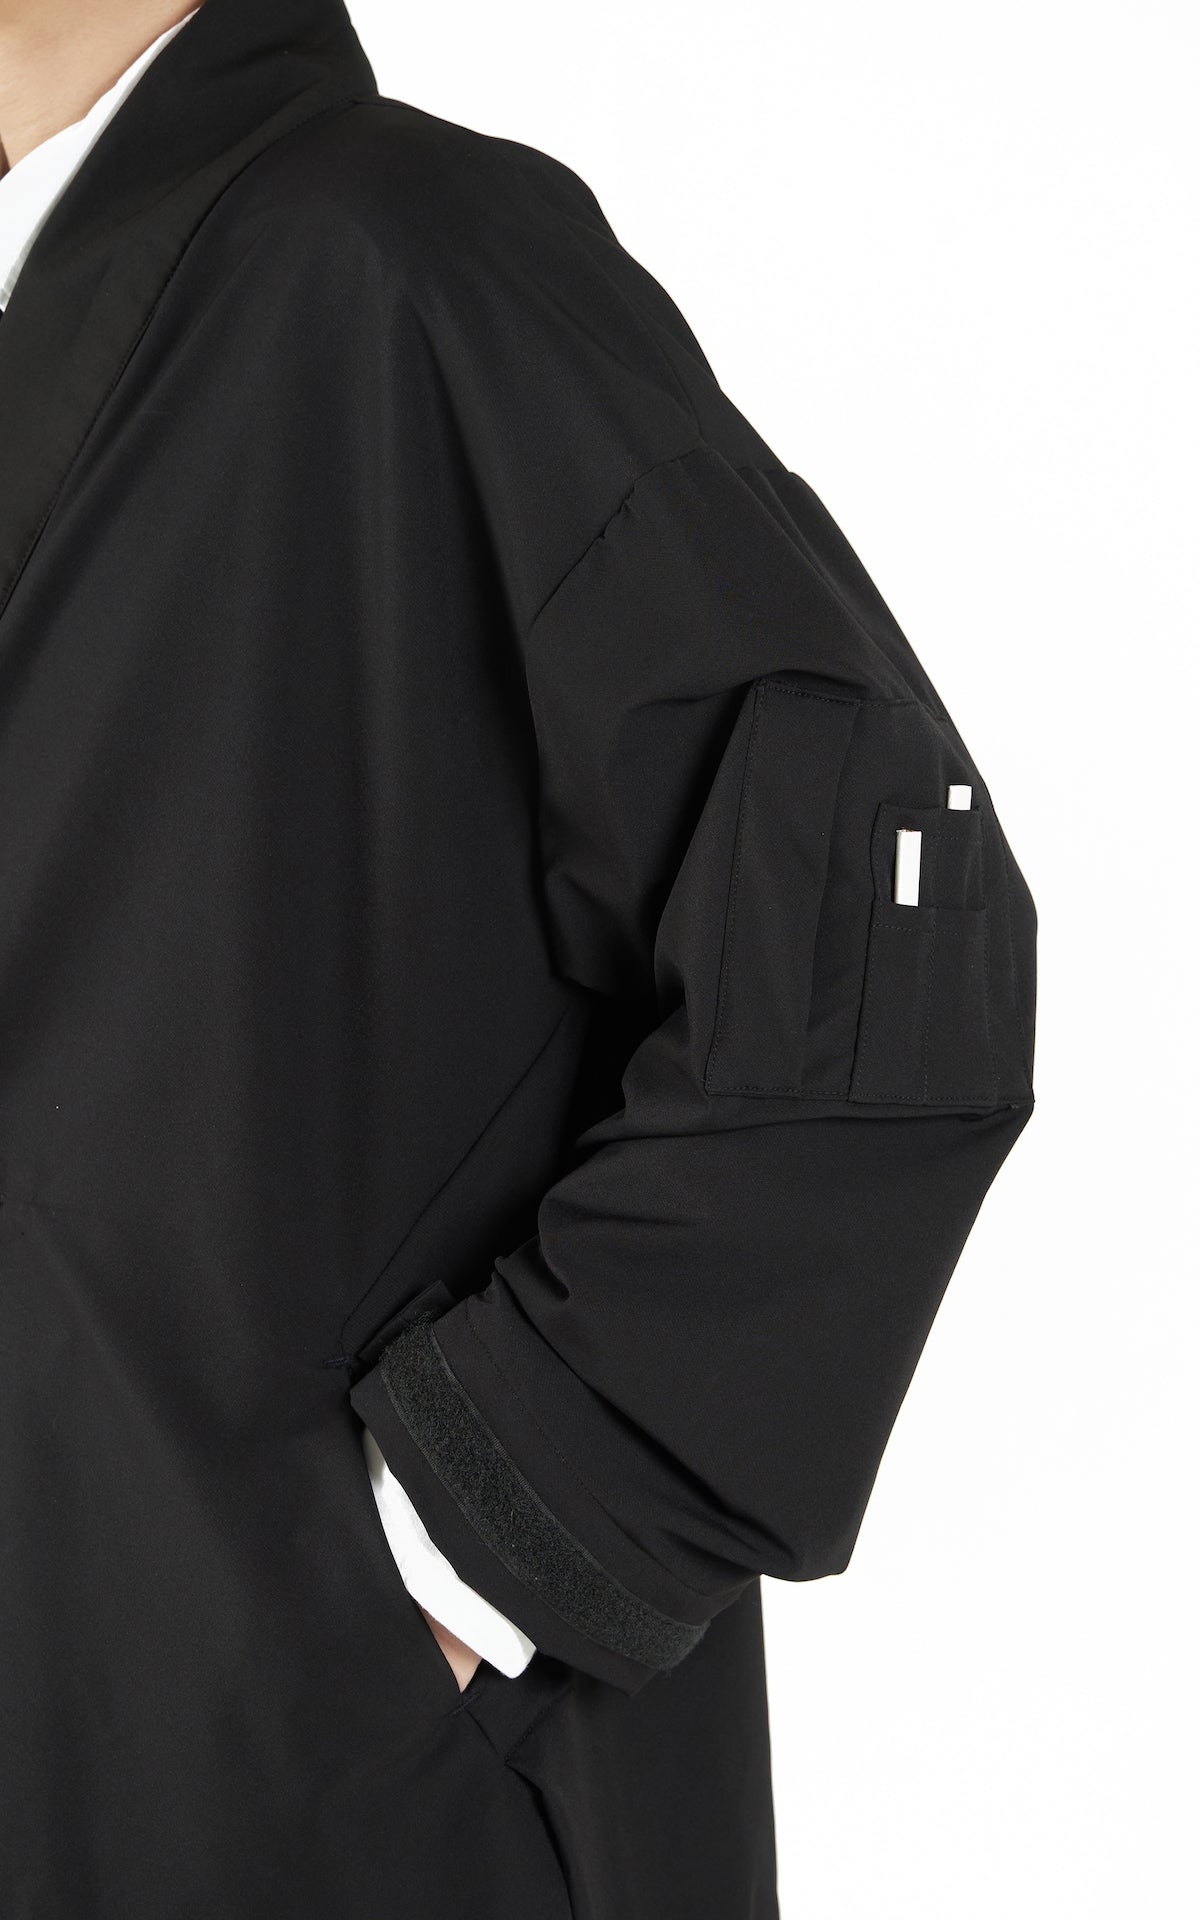 1. "MULTI" Nylon Waterproof 4 Way-Stretch Jacket